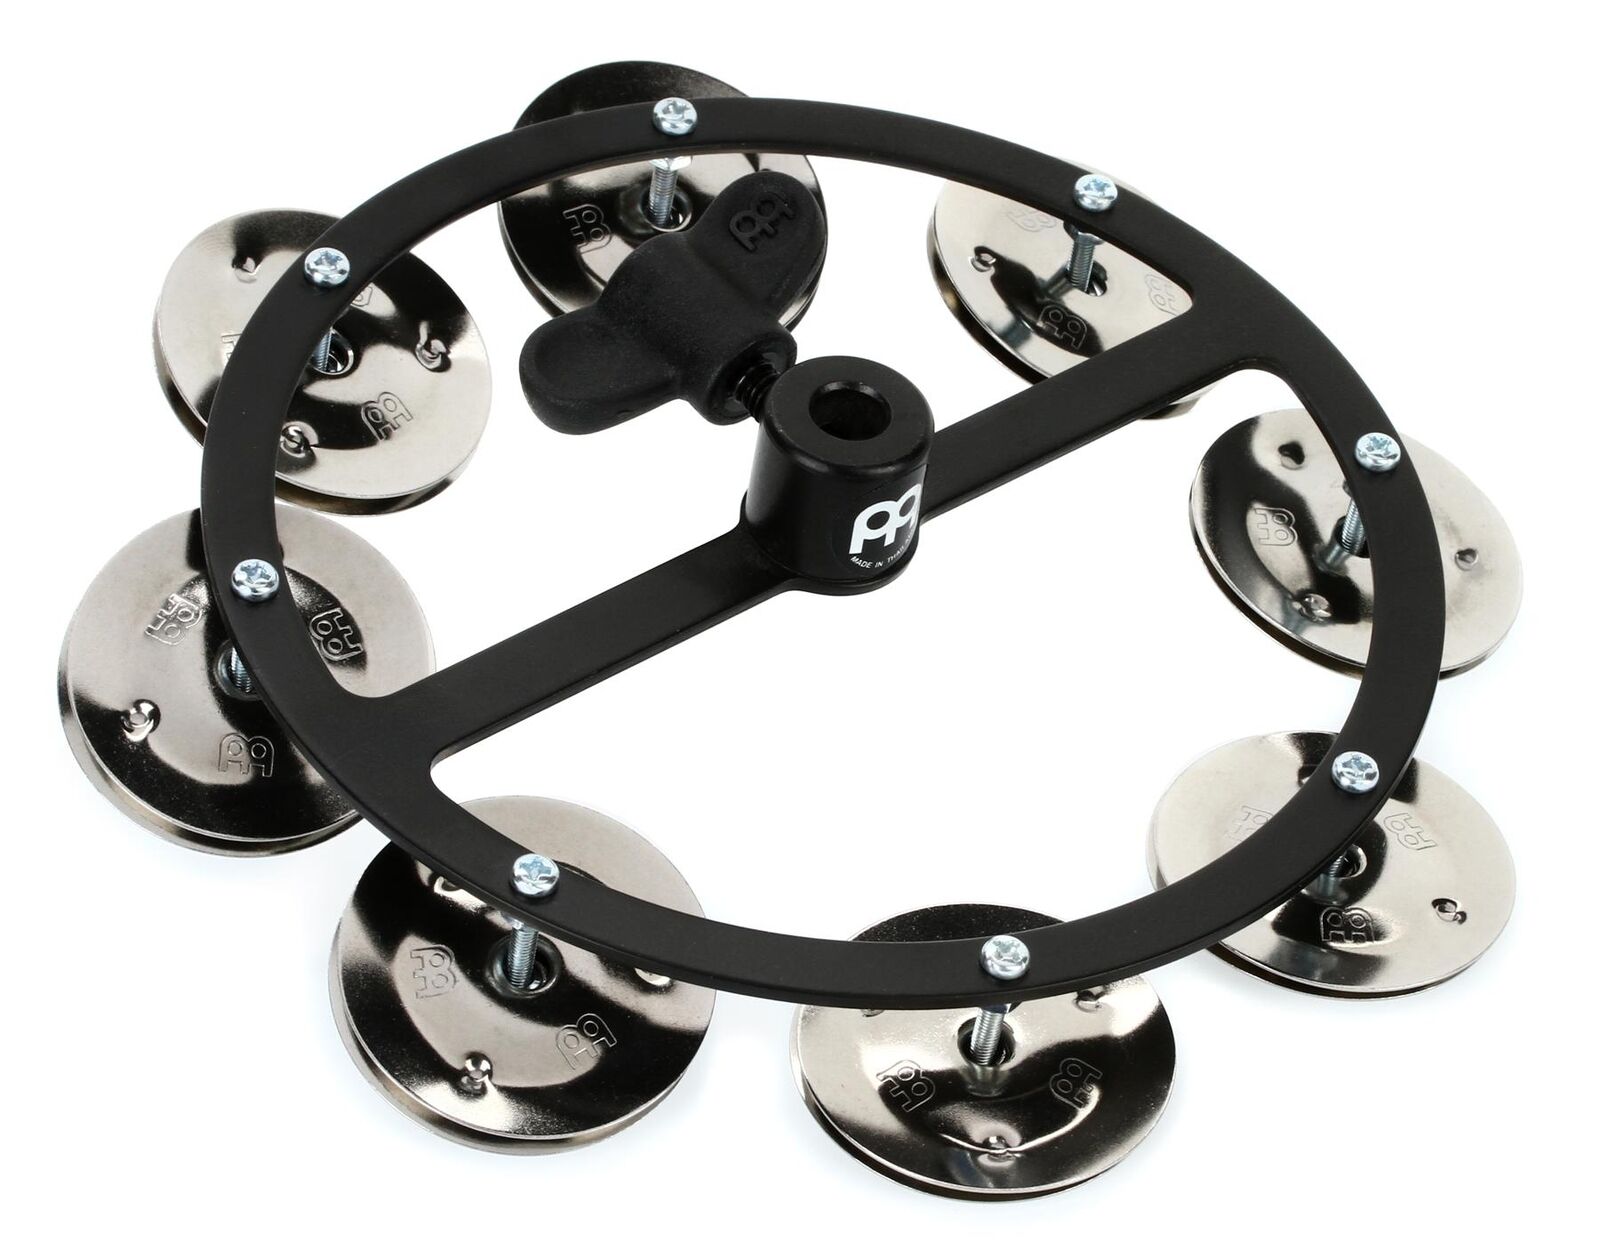 Meinl Percussion Headliner Series Hi-Hat Tambourine - Black (5-pack) Bundle